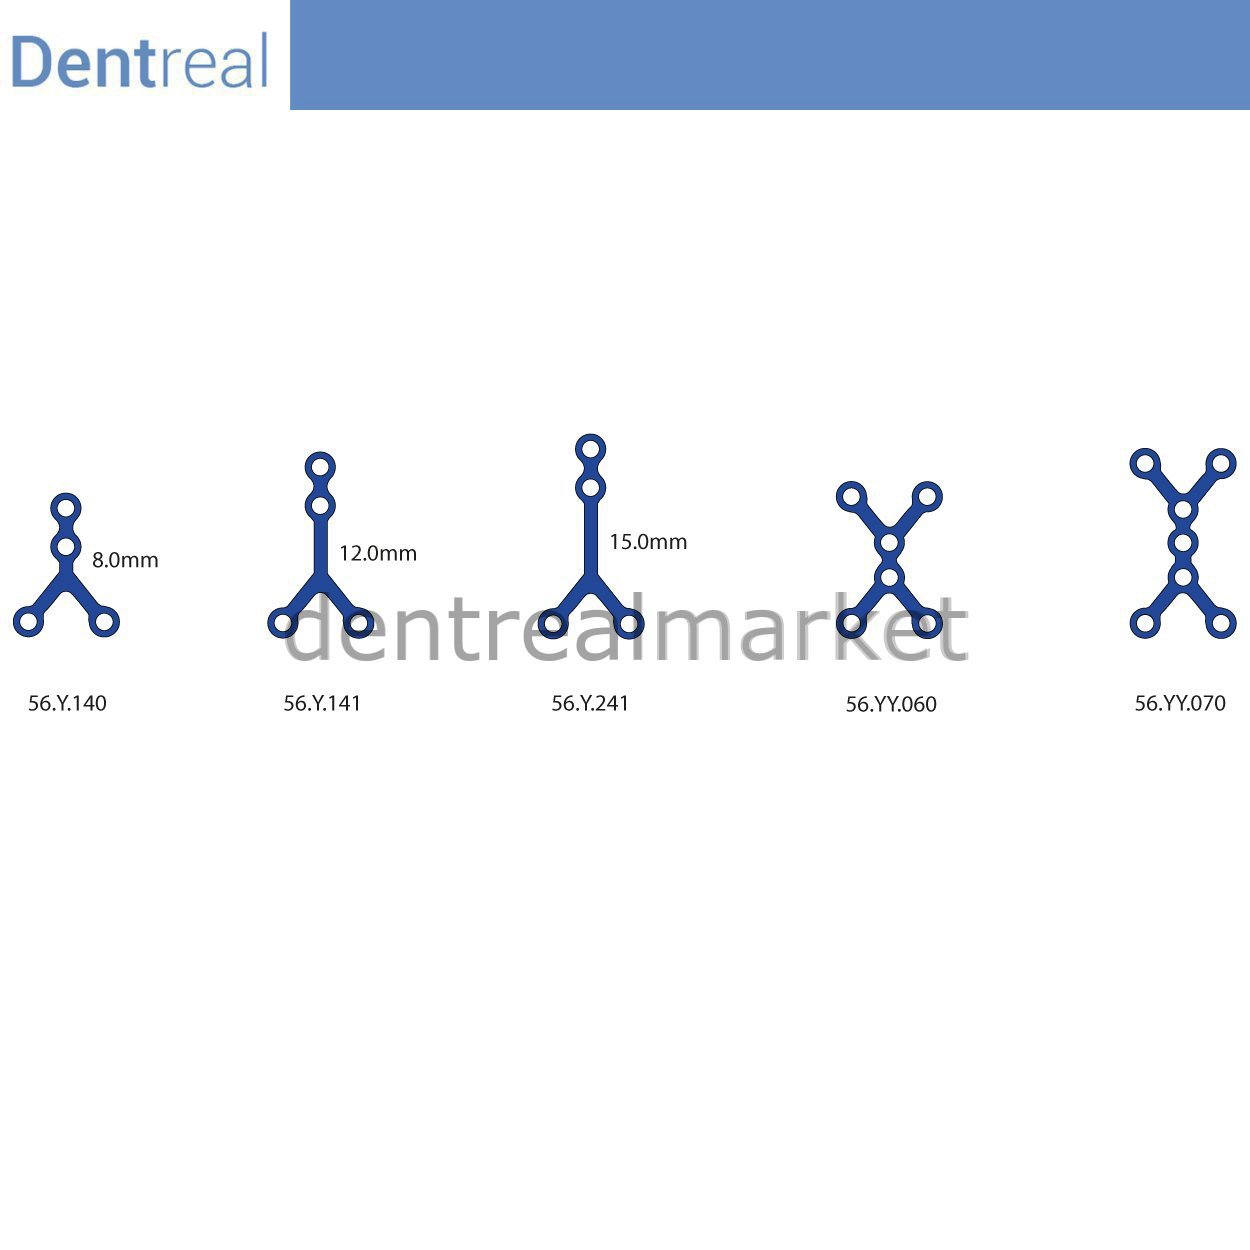 DentrealStore - Dentreal Titanium Maxillofacial Plate Micro Bone Plate 0.6 mm